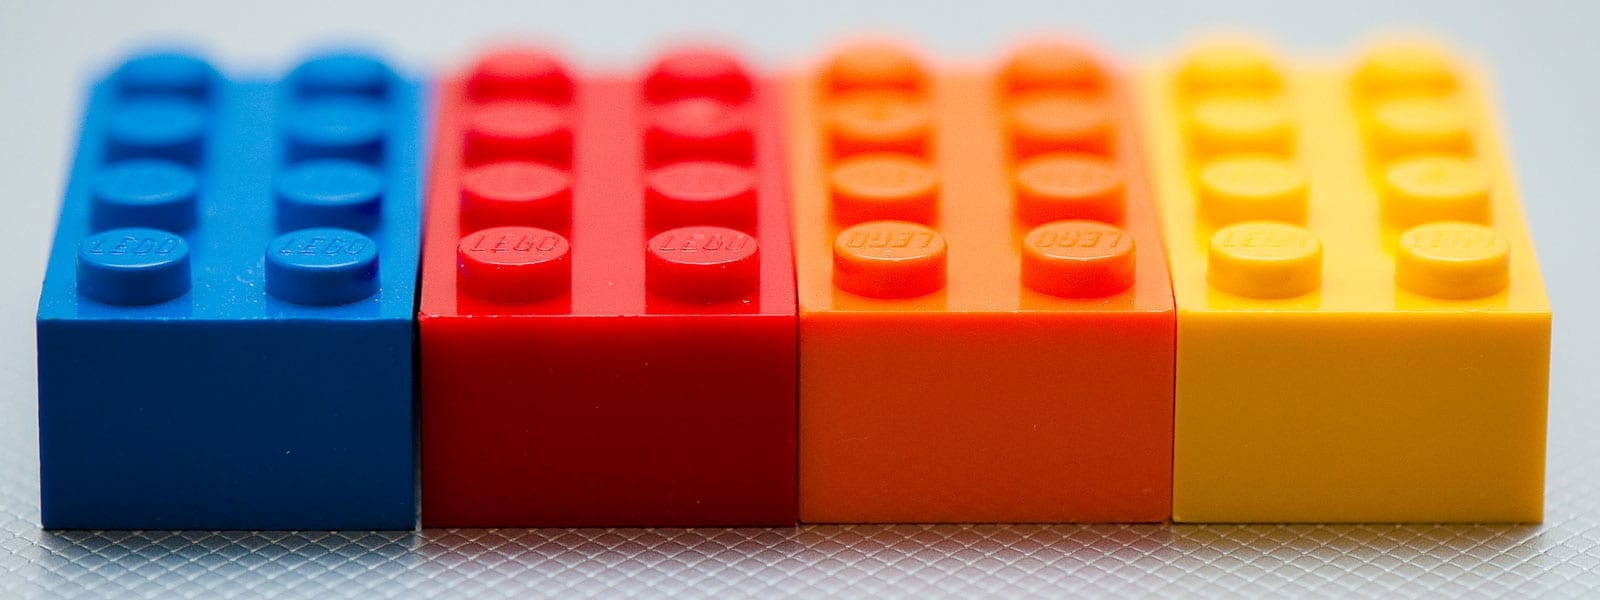 Lego-Bricks-Colorful